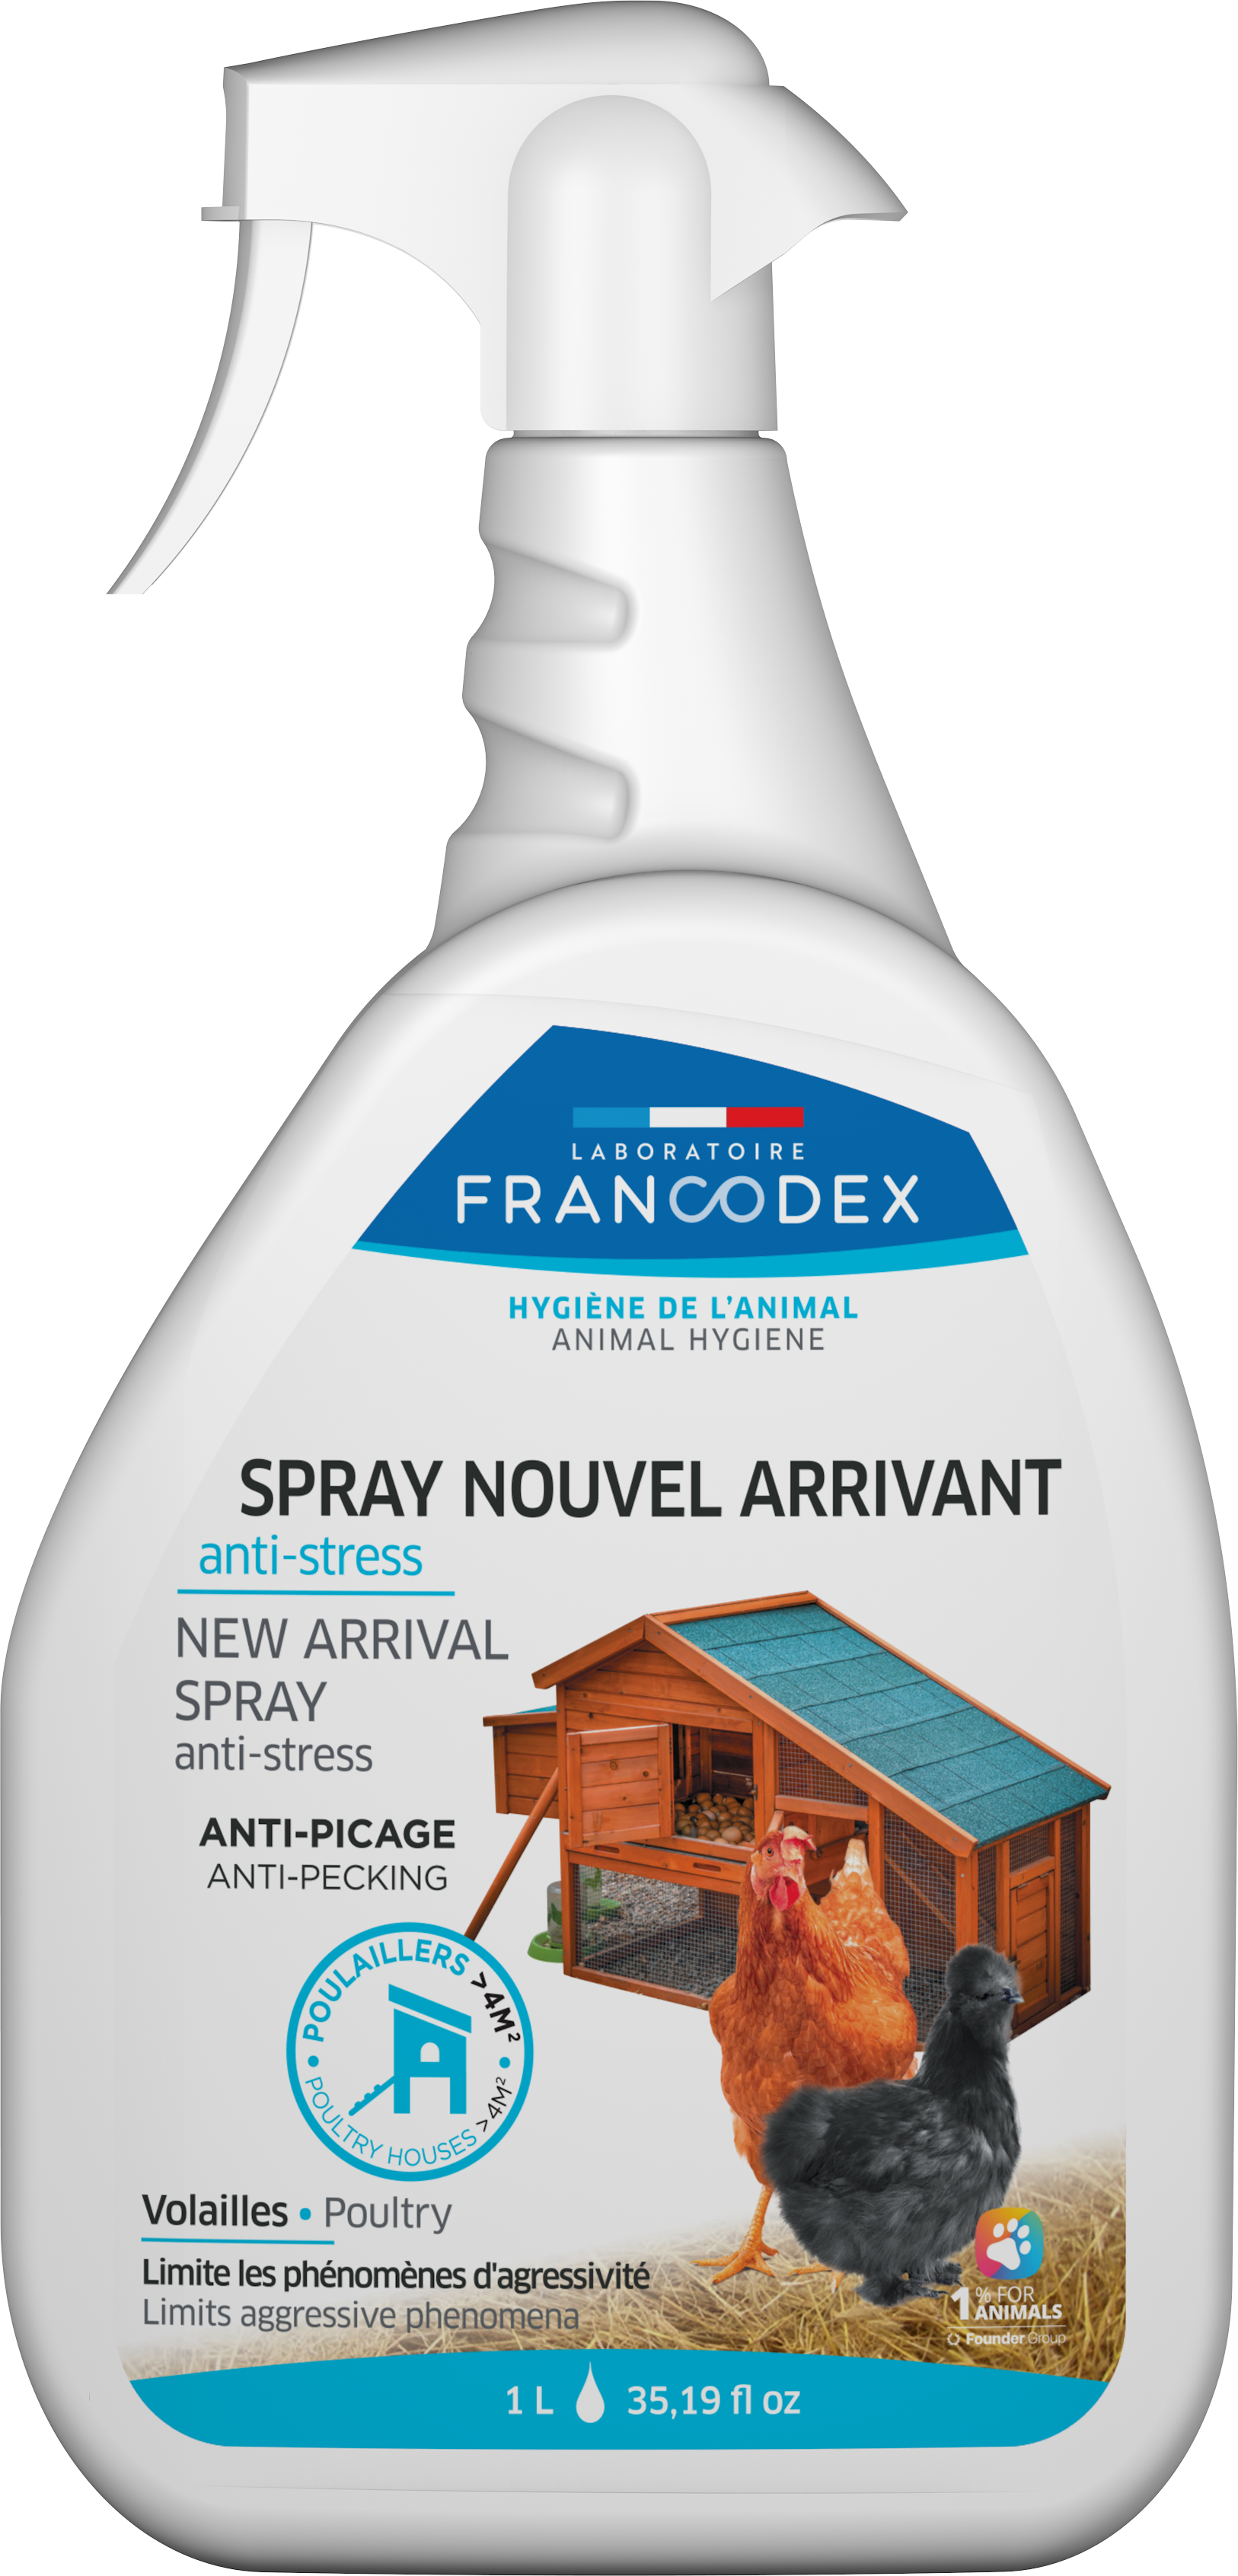 Francodex Spray Anti-Stress voor nieuwe kippen